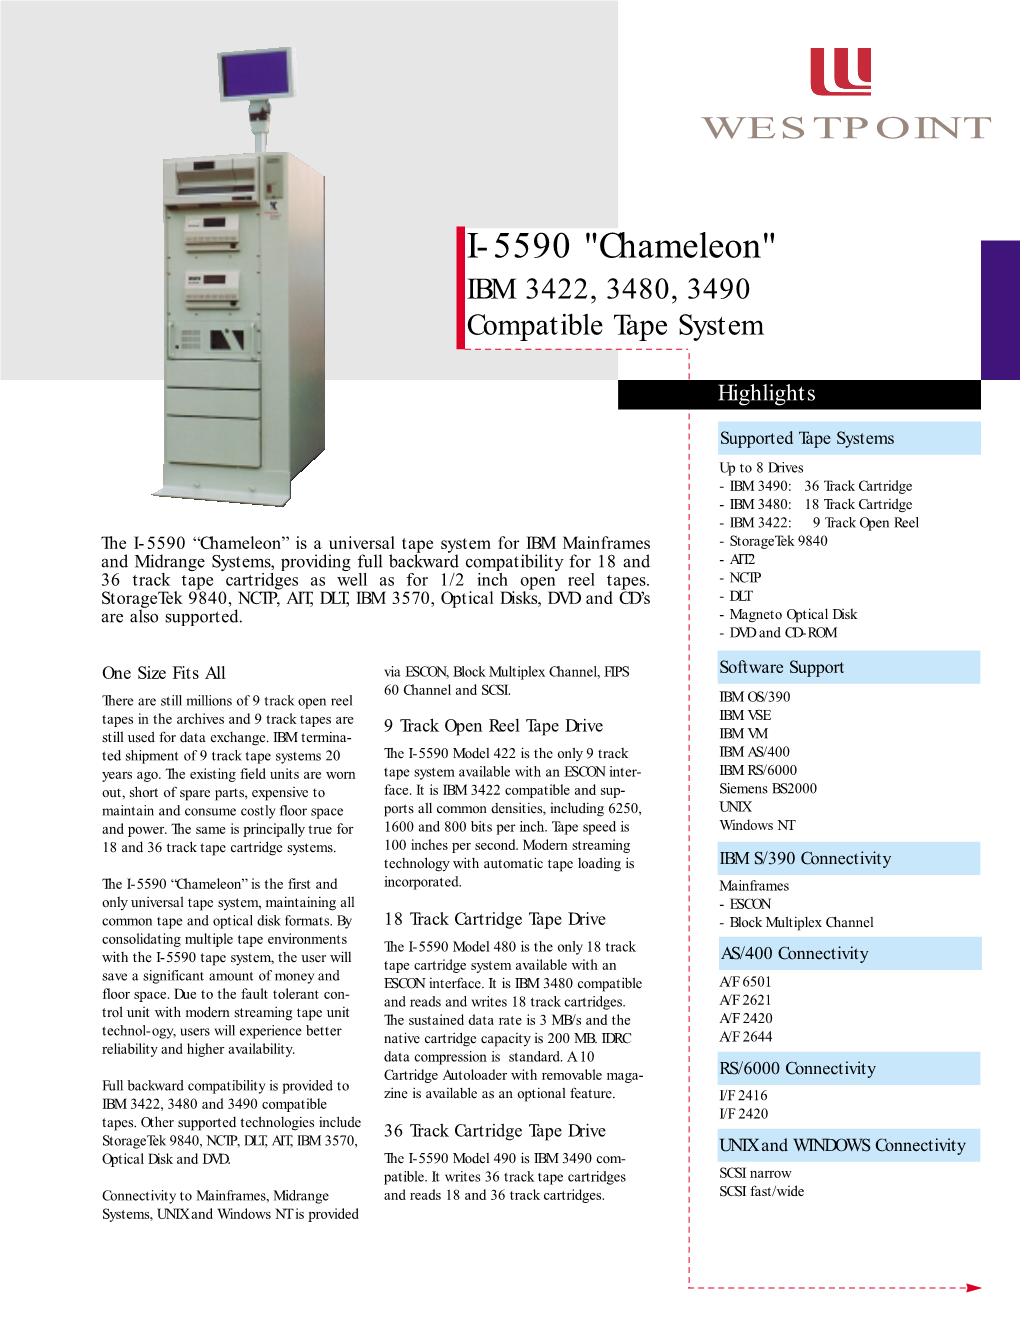 I-5590 "Chameleon" IBM 3422, 3480, 3490 Compatible Tape System